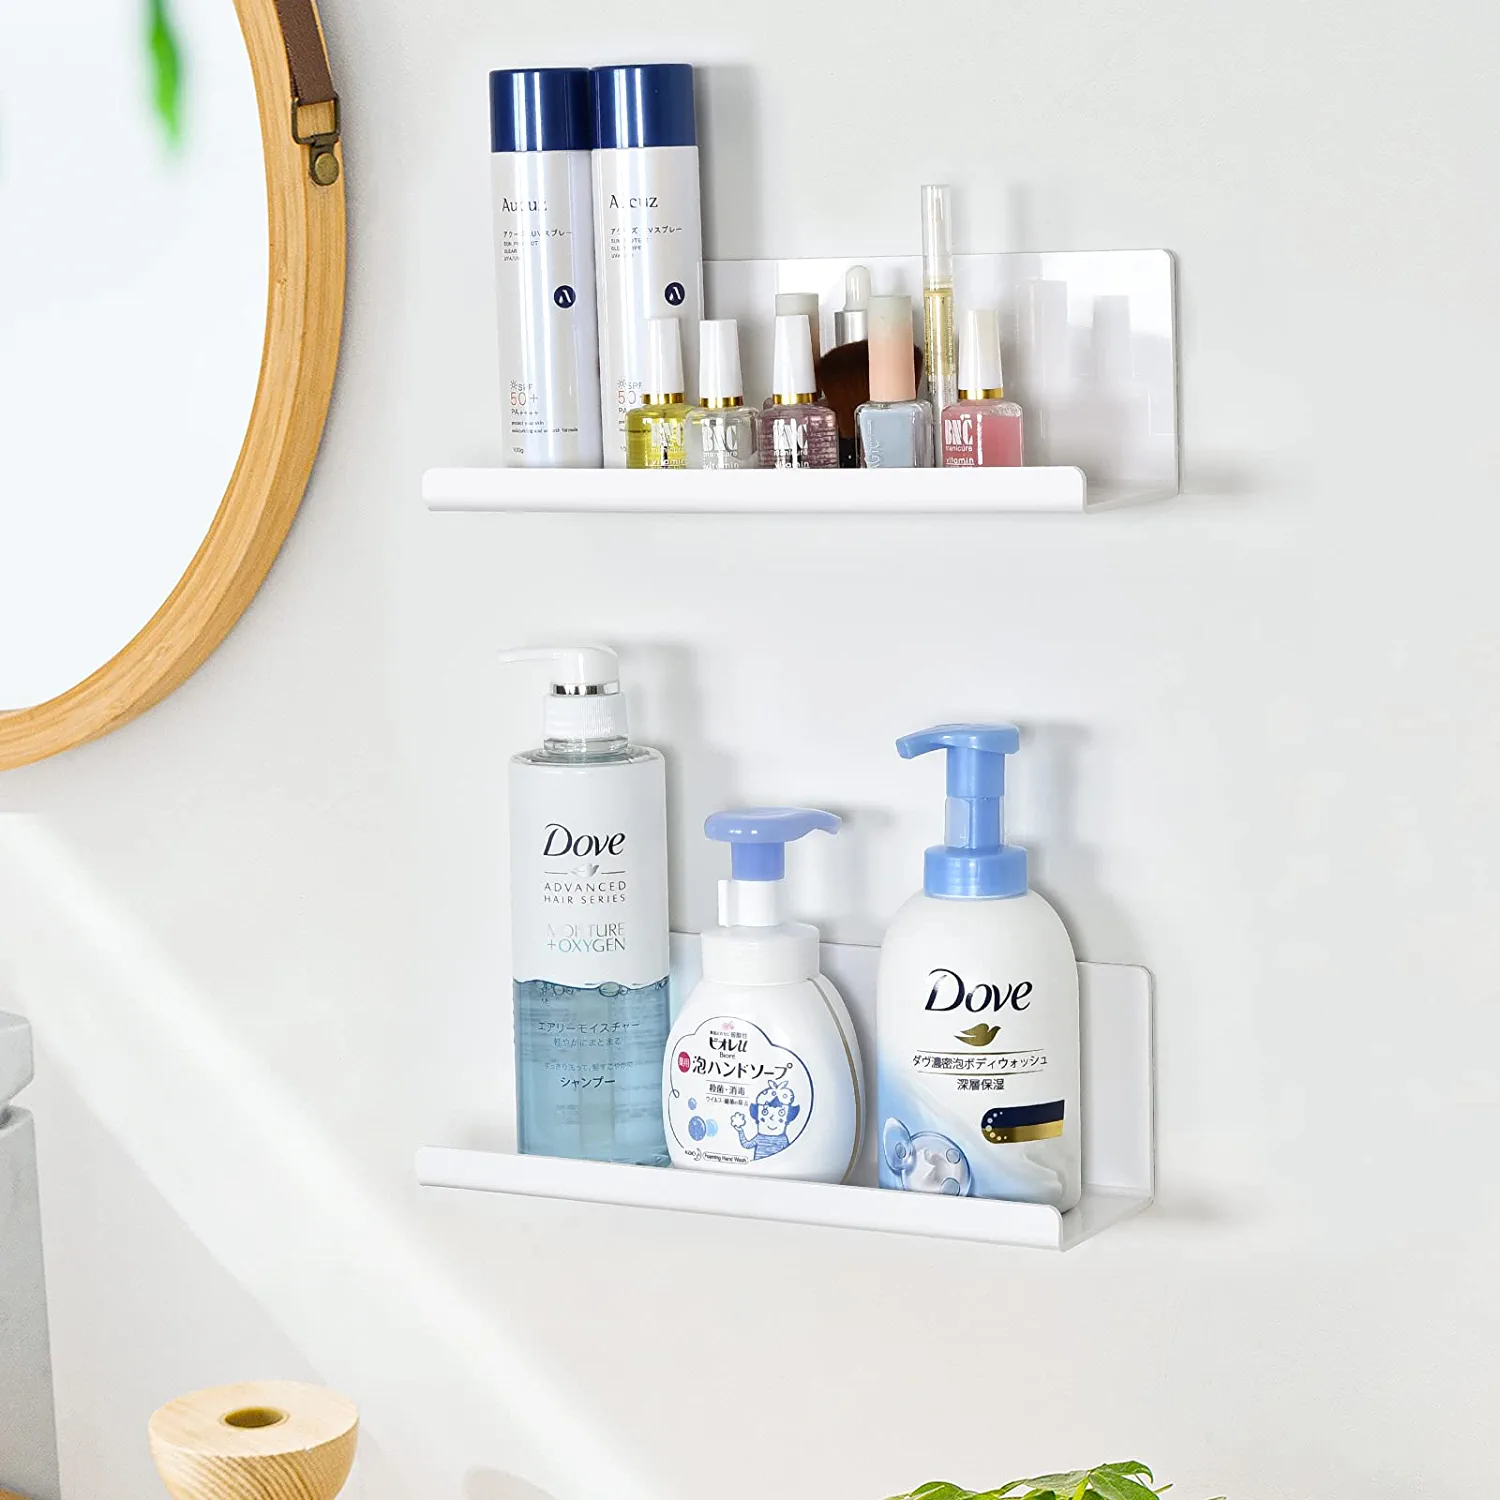 Self Adhesive Acrylic Bathroom Shelves No Drill, Stable Wall Mounted Shelf